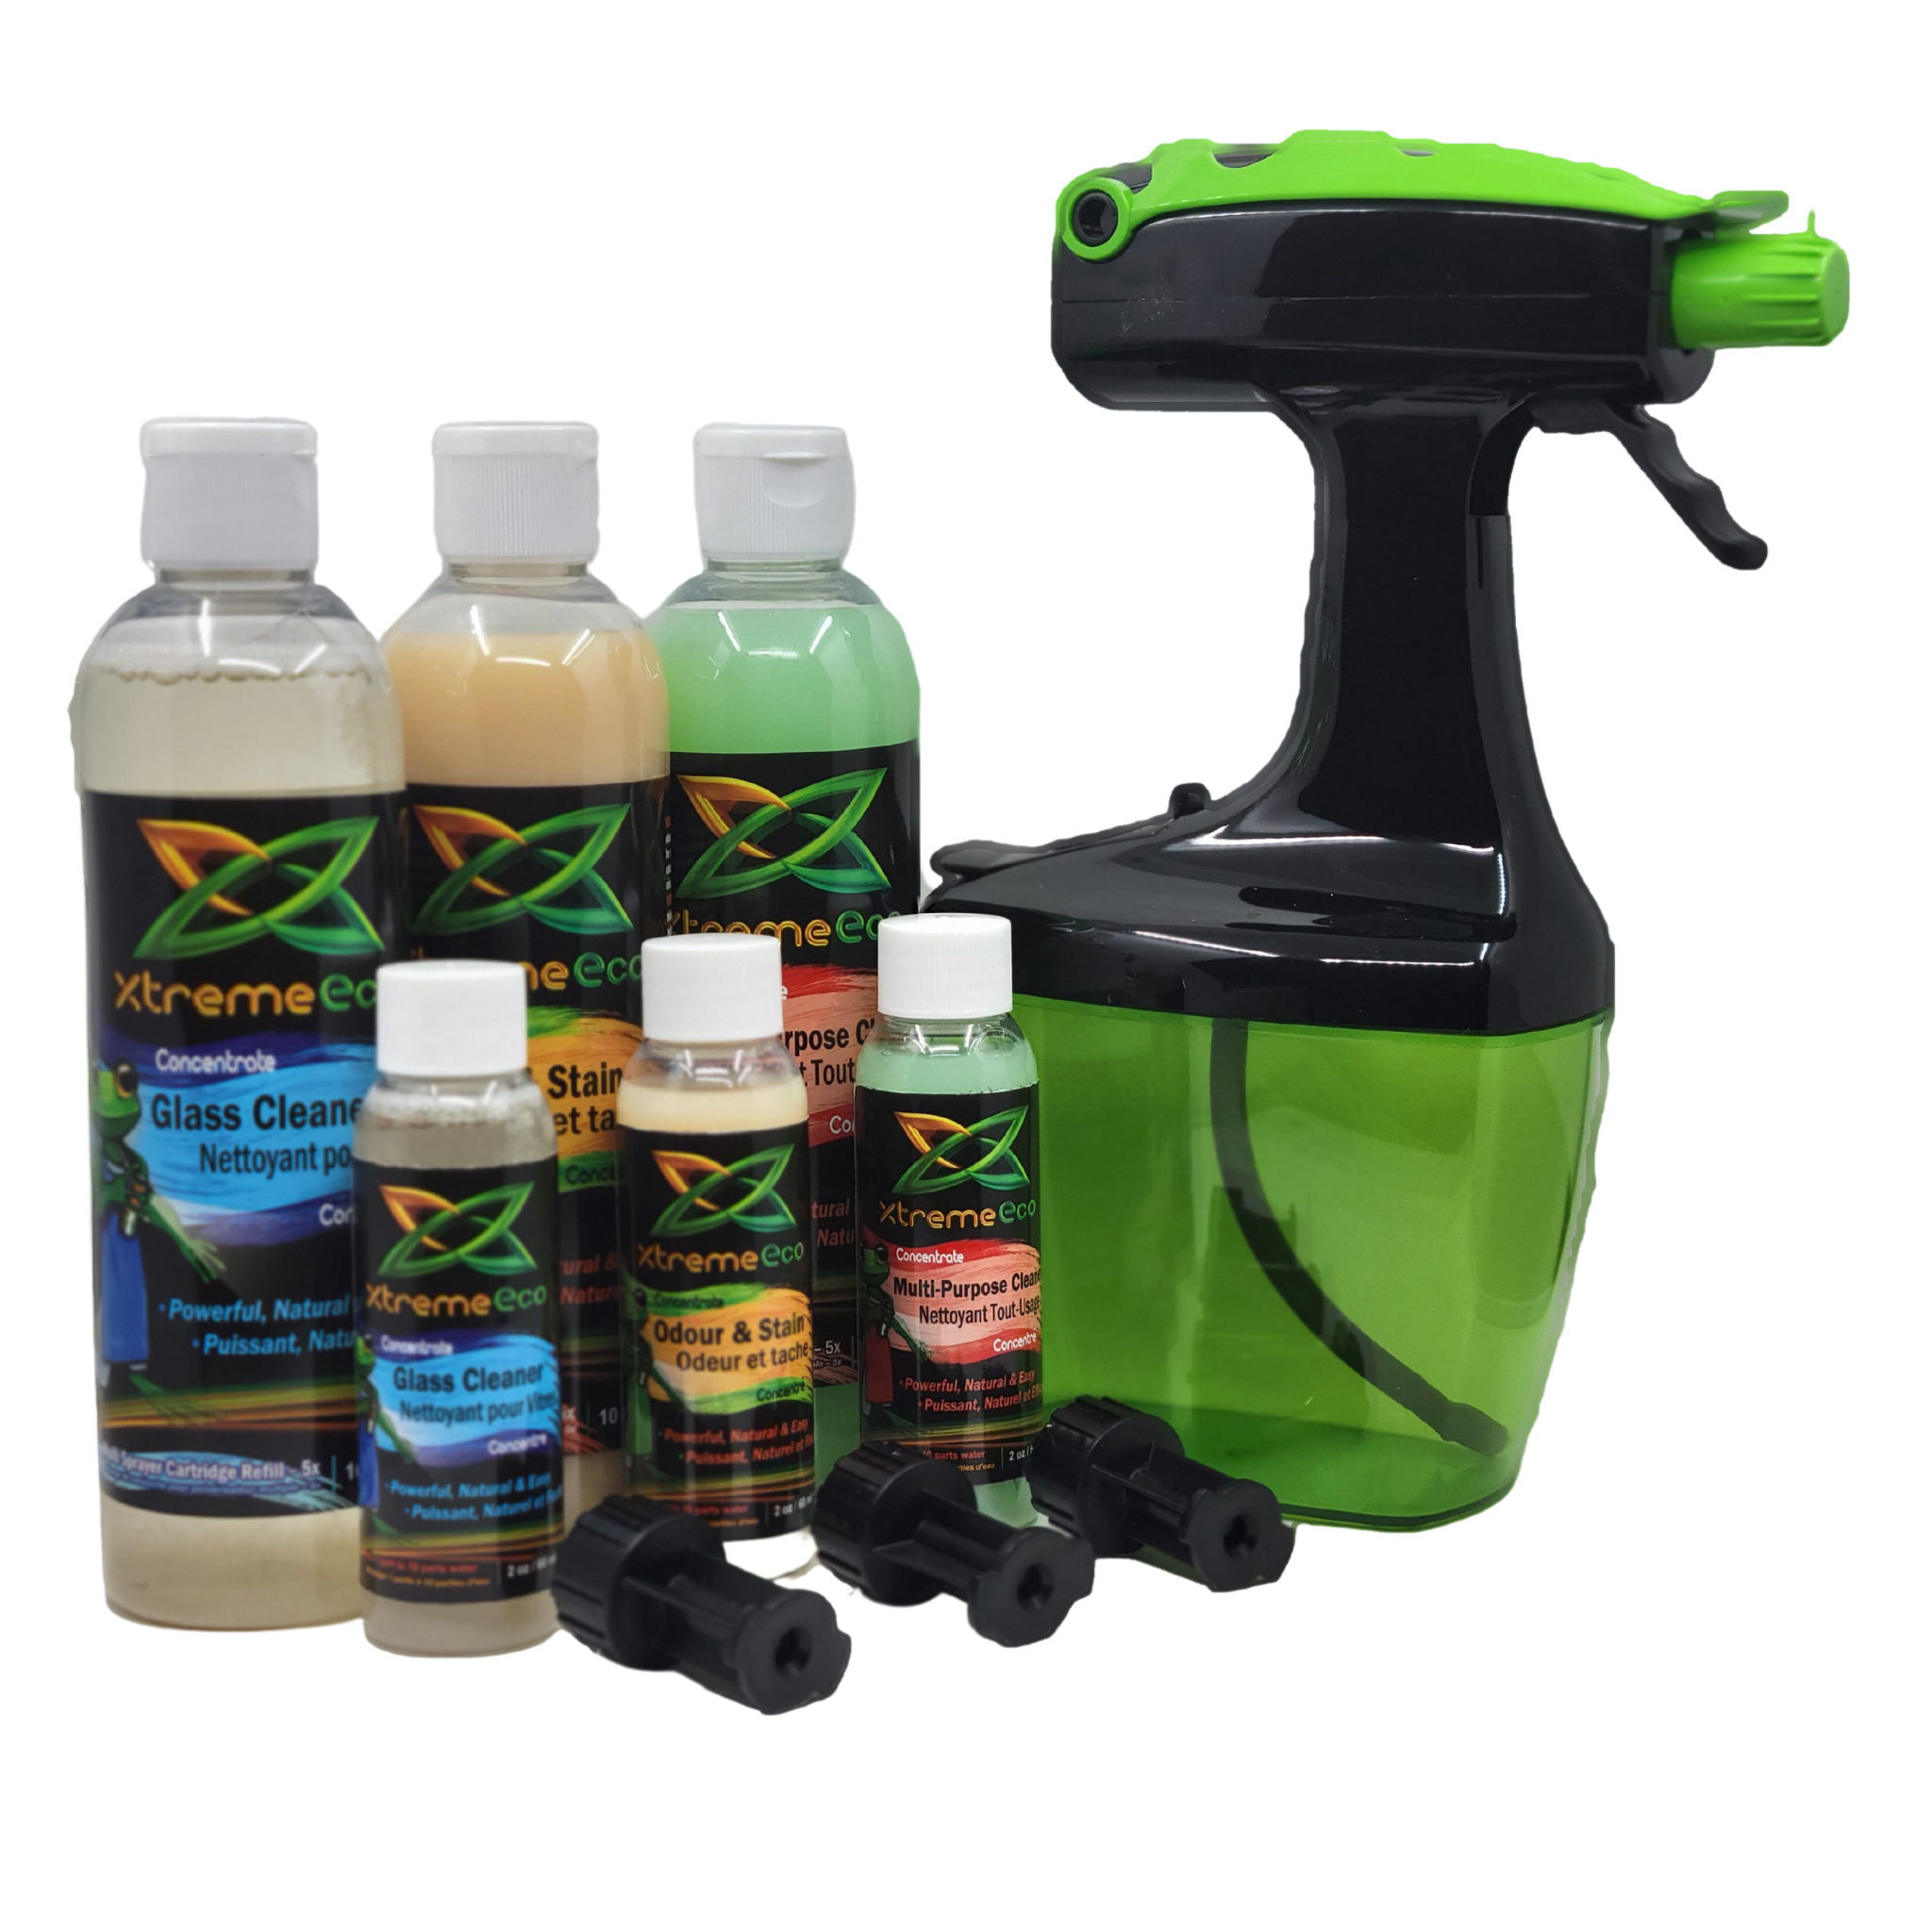 The Xtreme Eco Multi Sprayer Value System